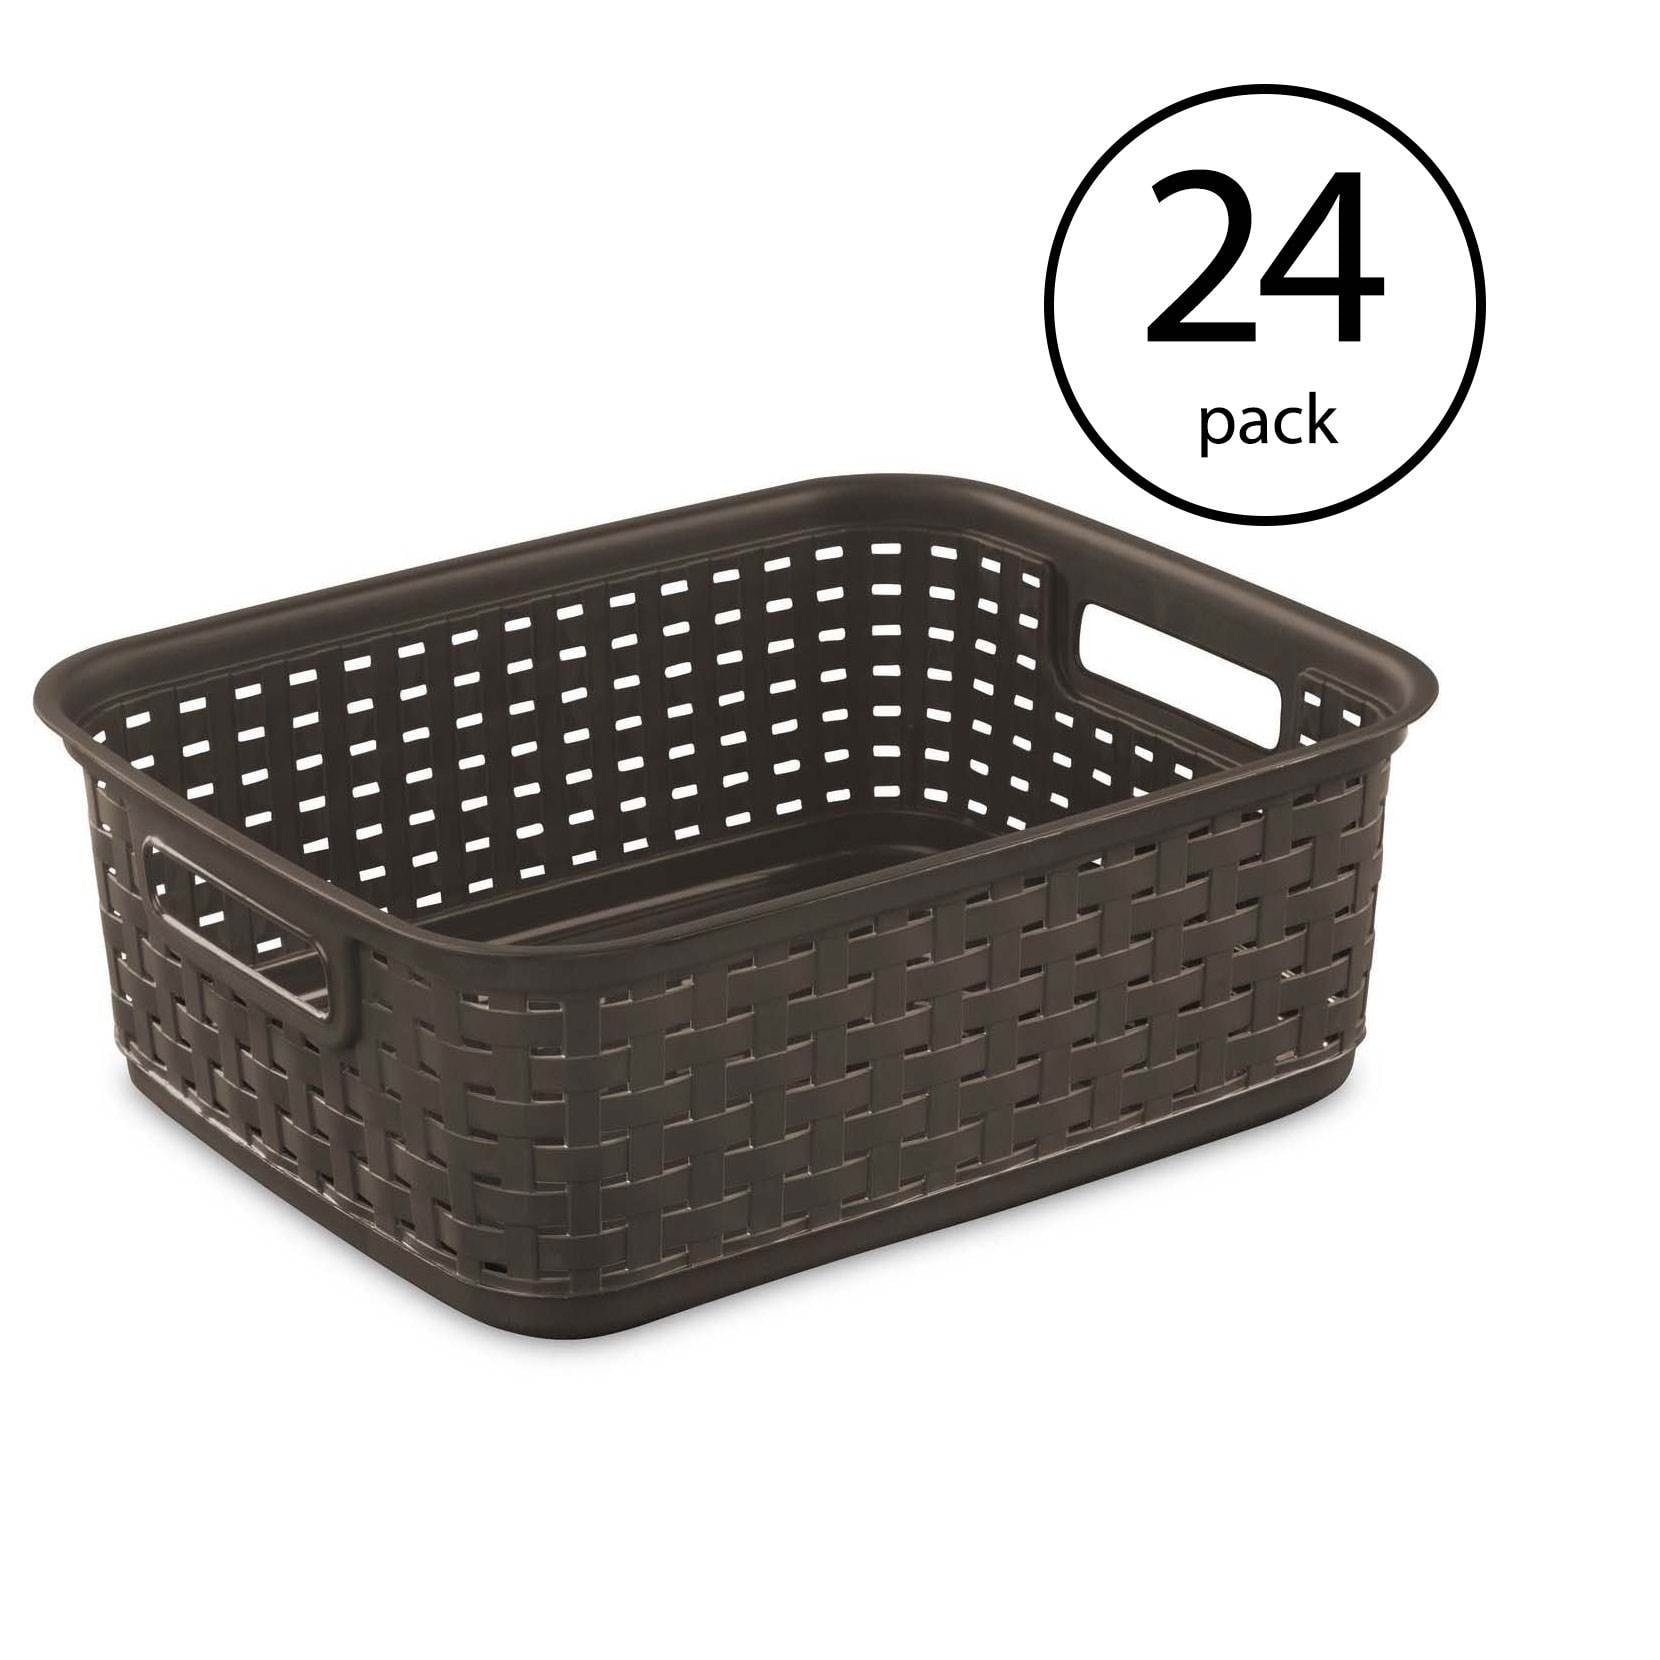 Sterilite Decorative Wicker Style Short Weave Storage Basket, Espresso (24 Pack) - 1